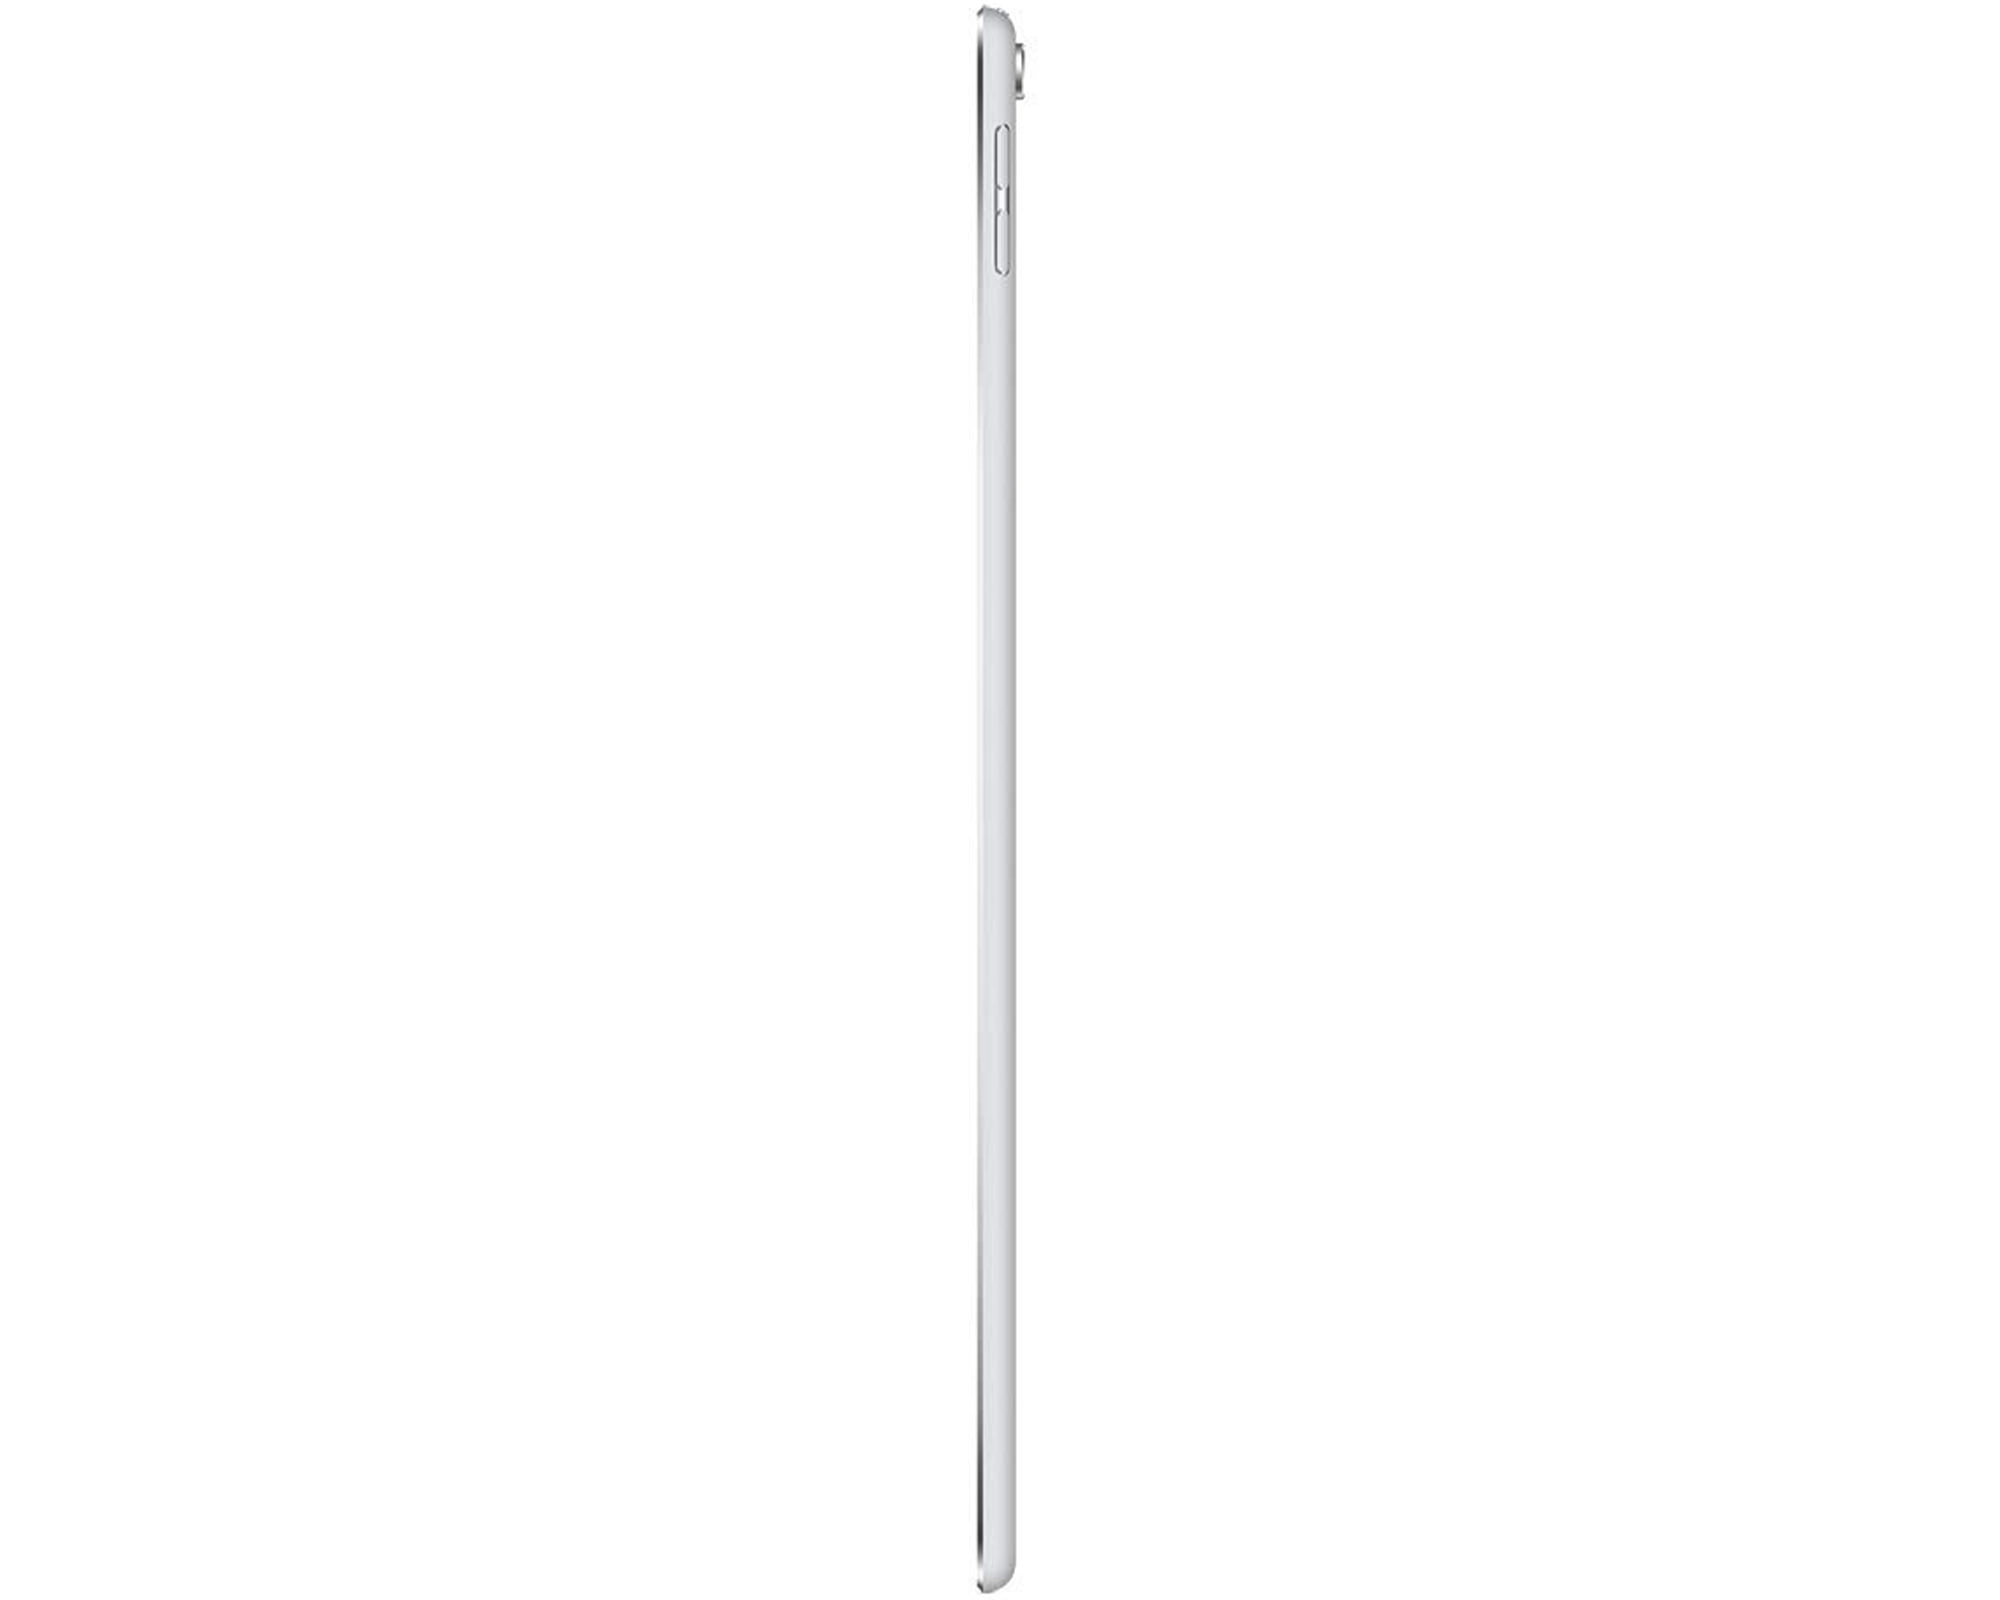 Apple 10.5-Inch iPad Pro Wi-Fi 256GB - Space Gray - Walmart.com